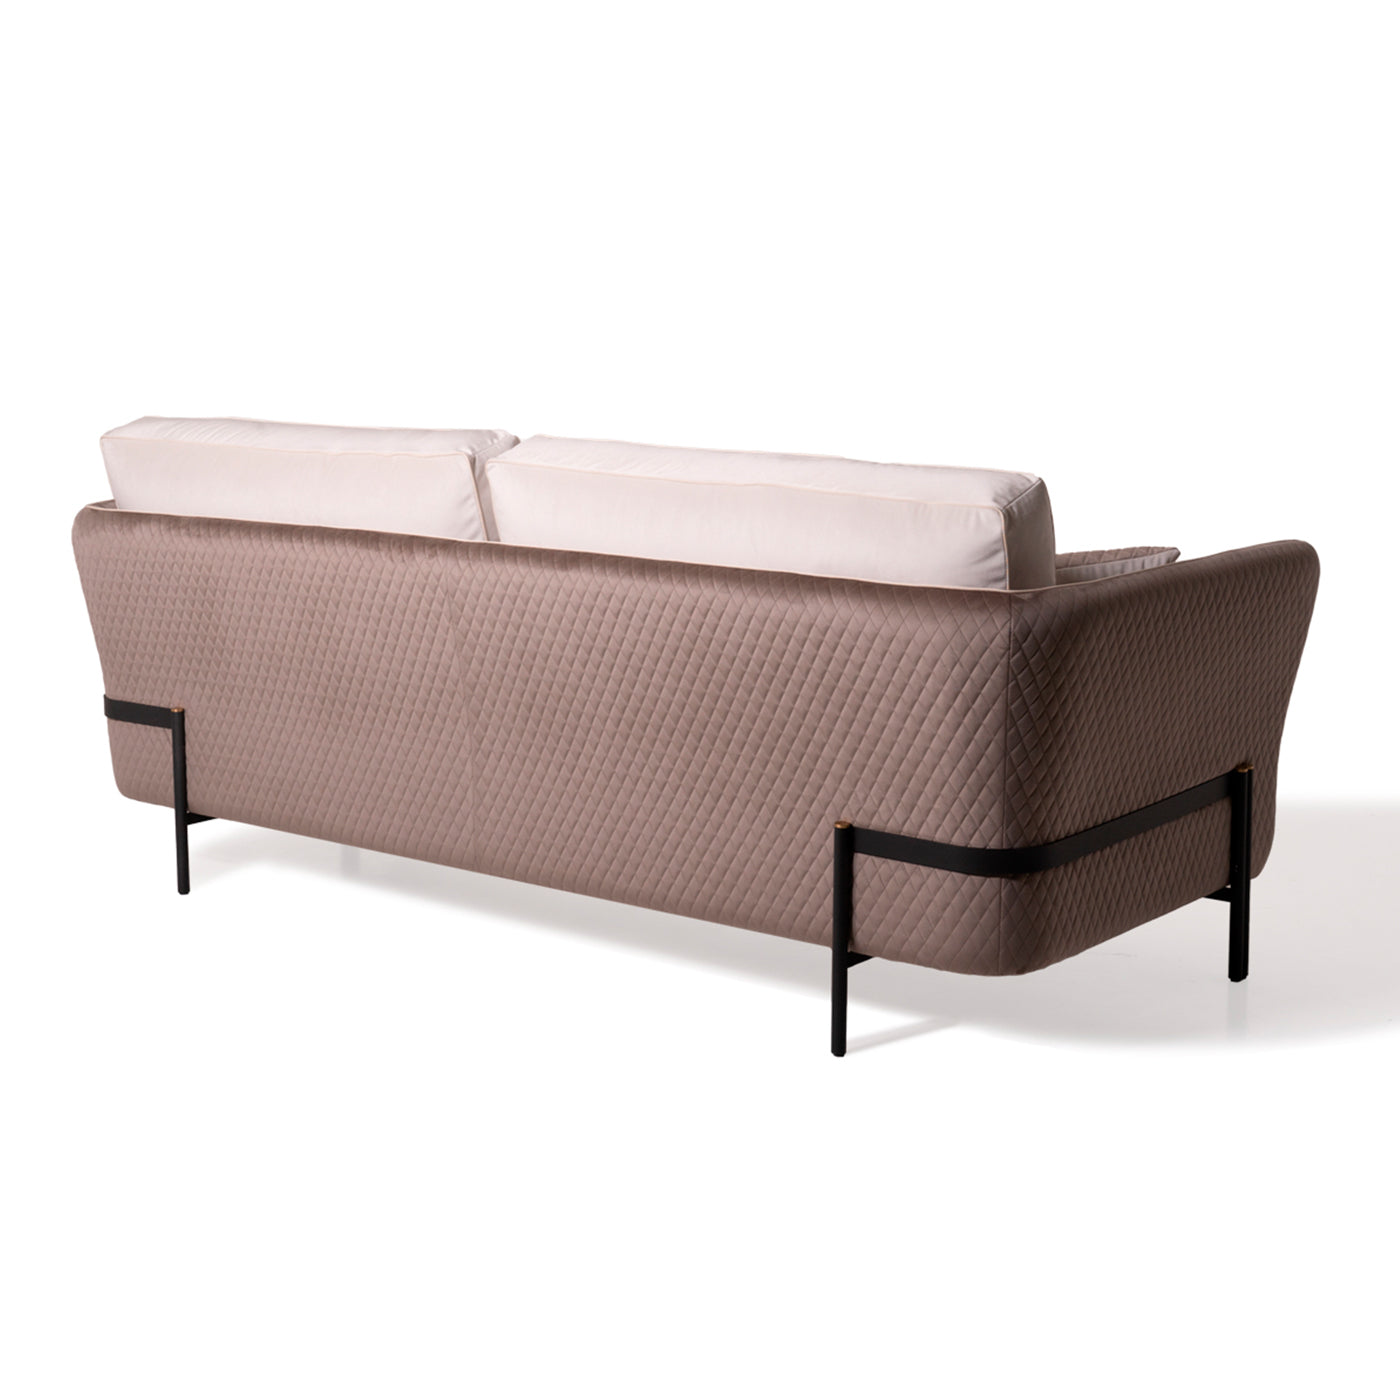 Universal Sofa by Marco and Giulio Mantellassi  - Alternative view 2